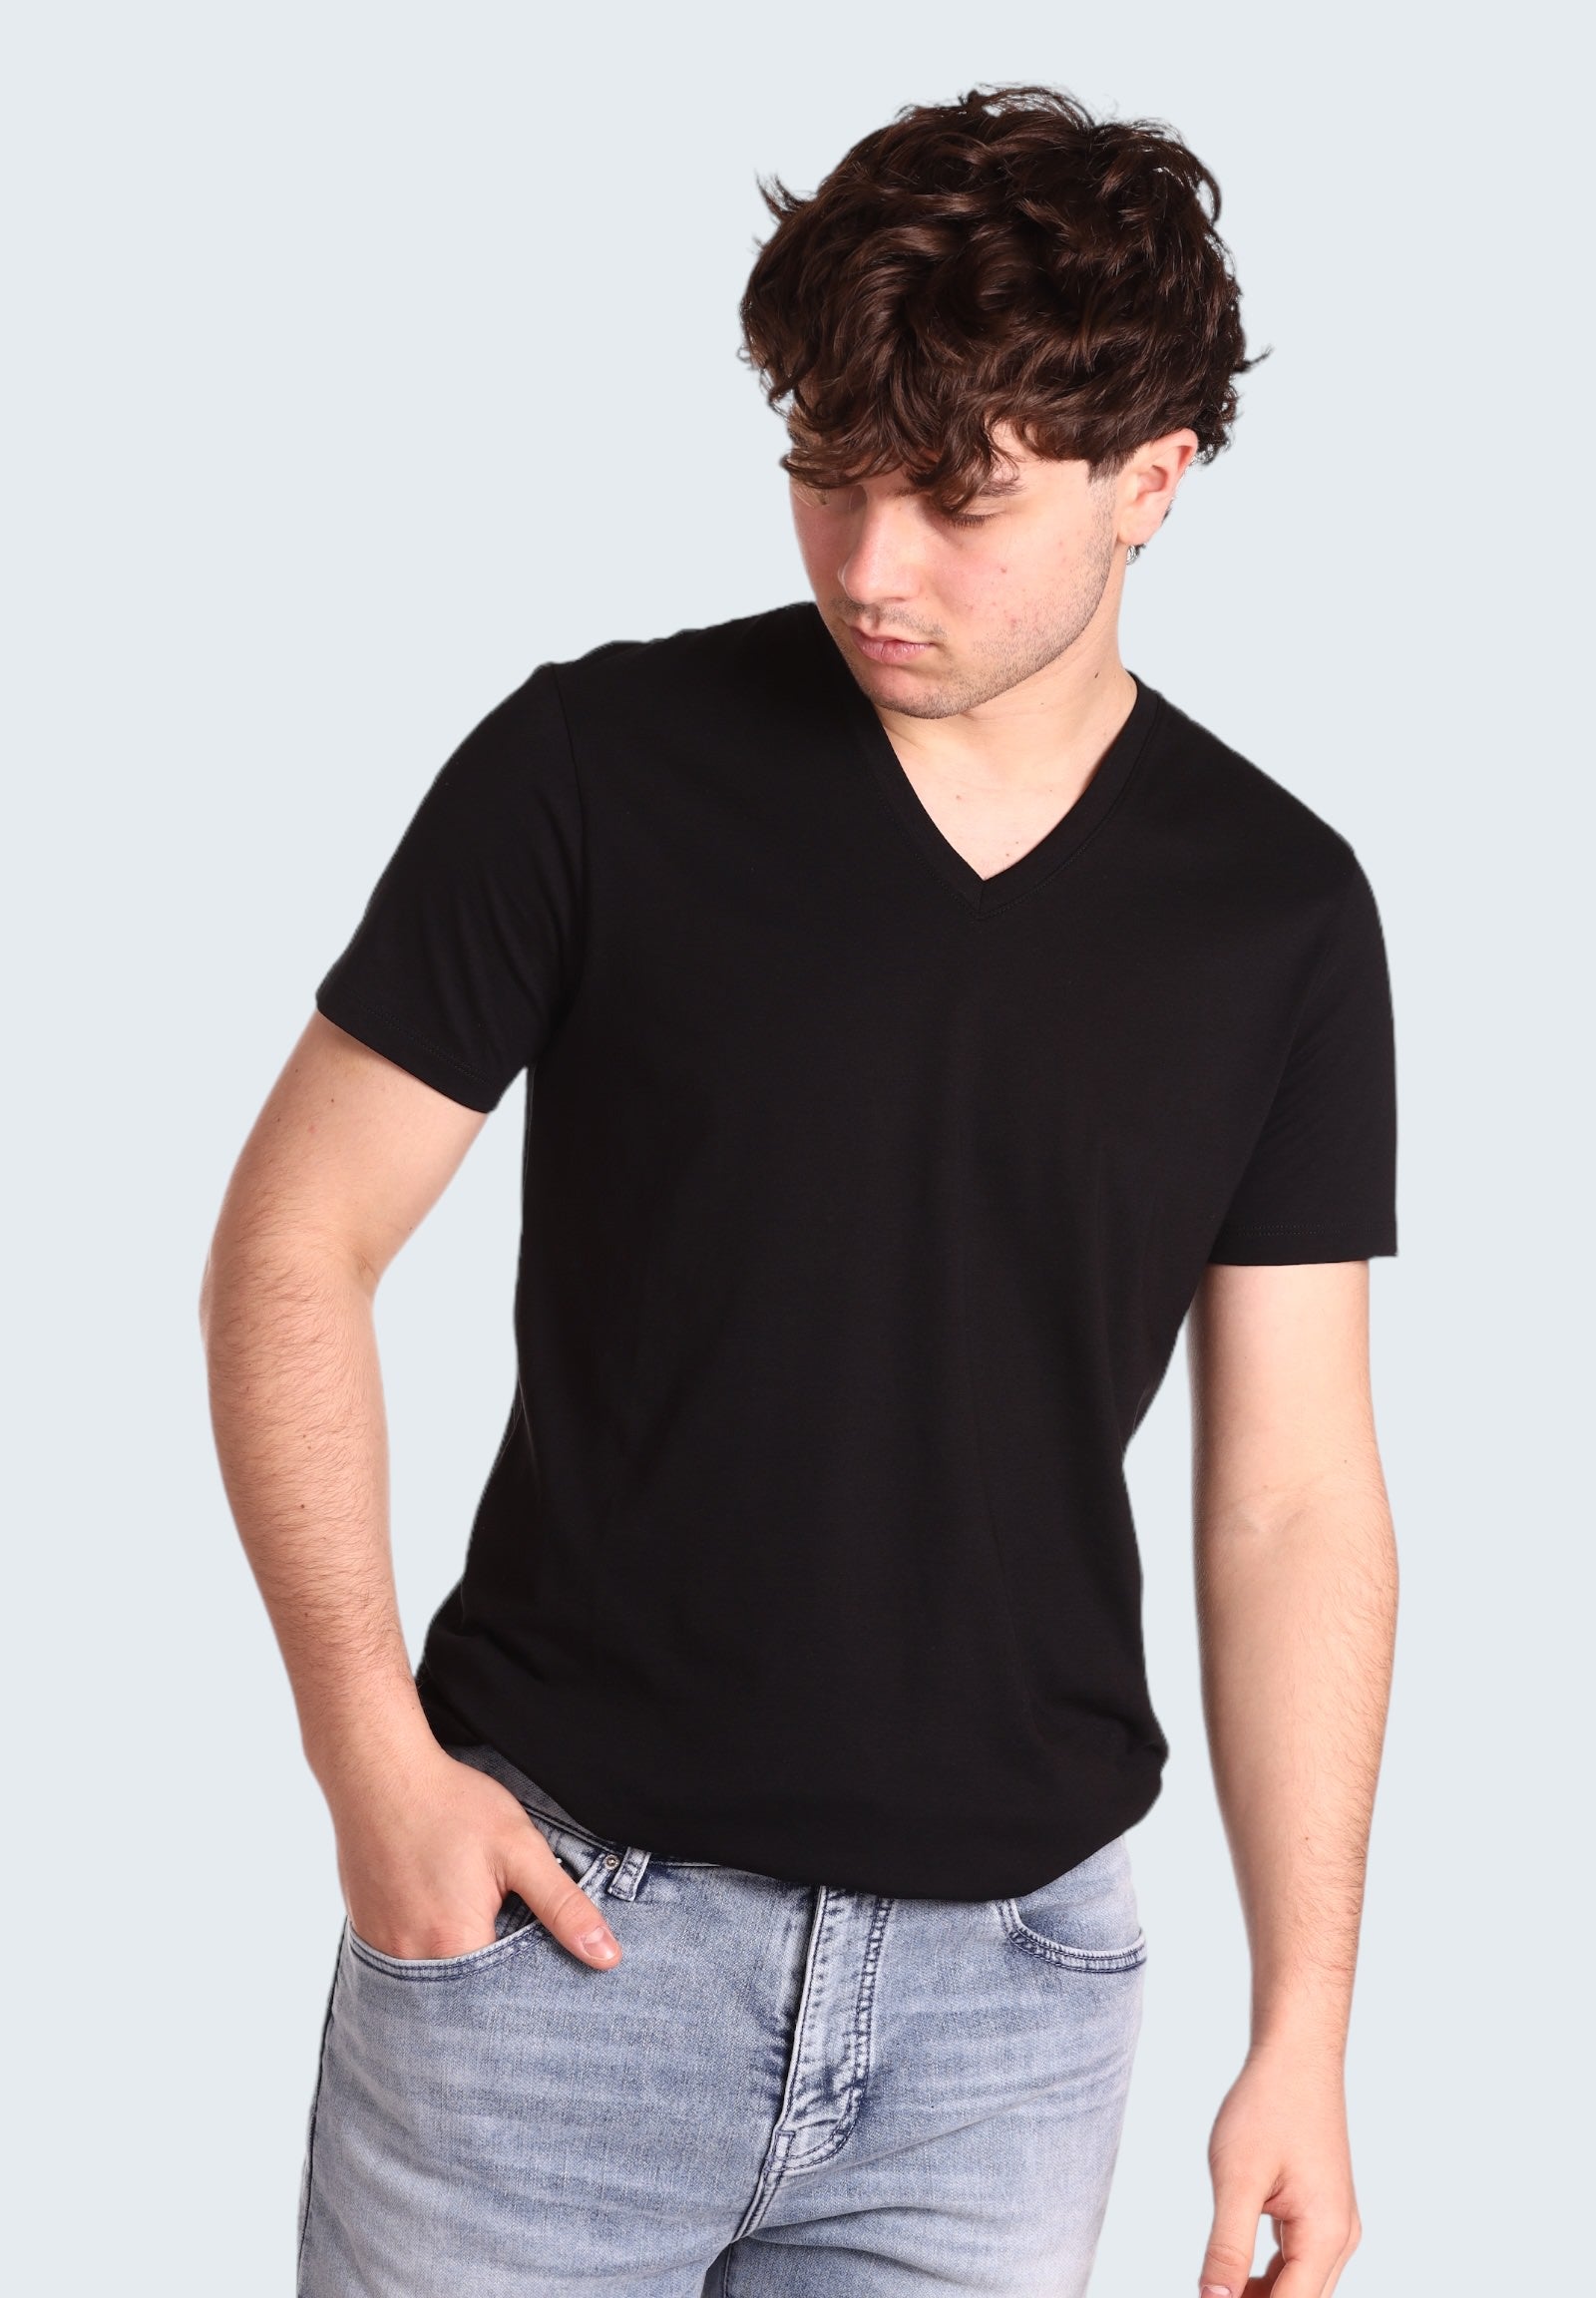 8nzt75 Black T-Shirt